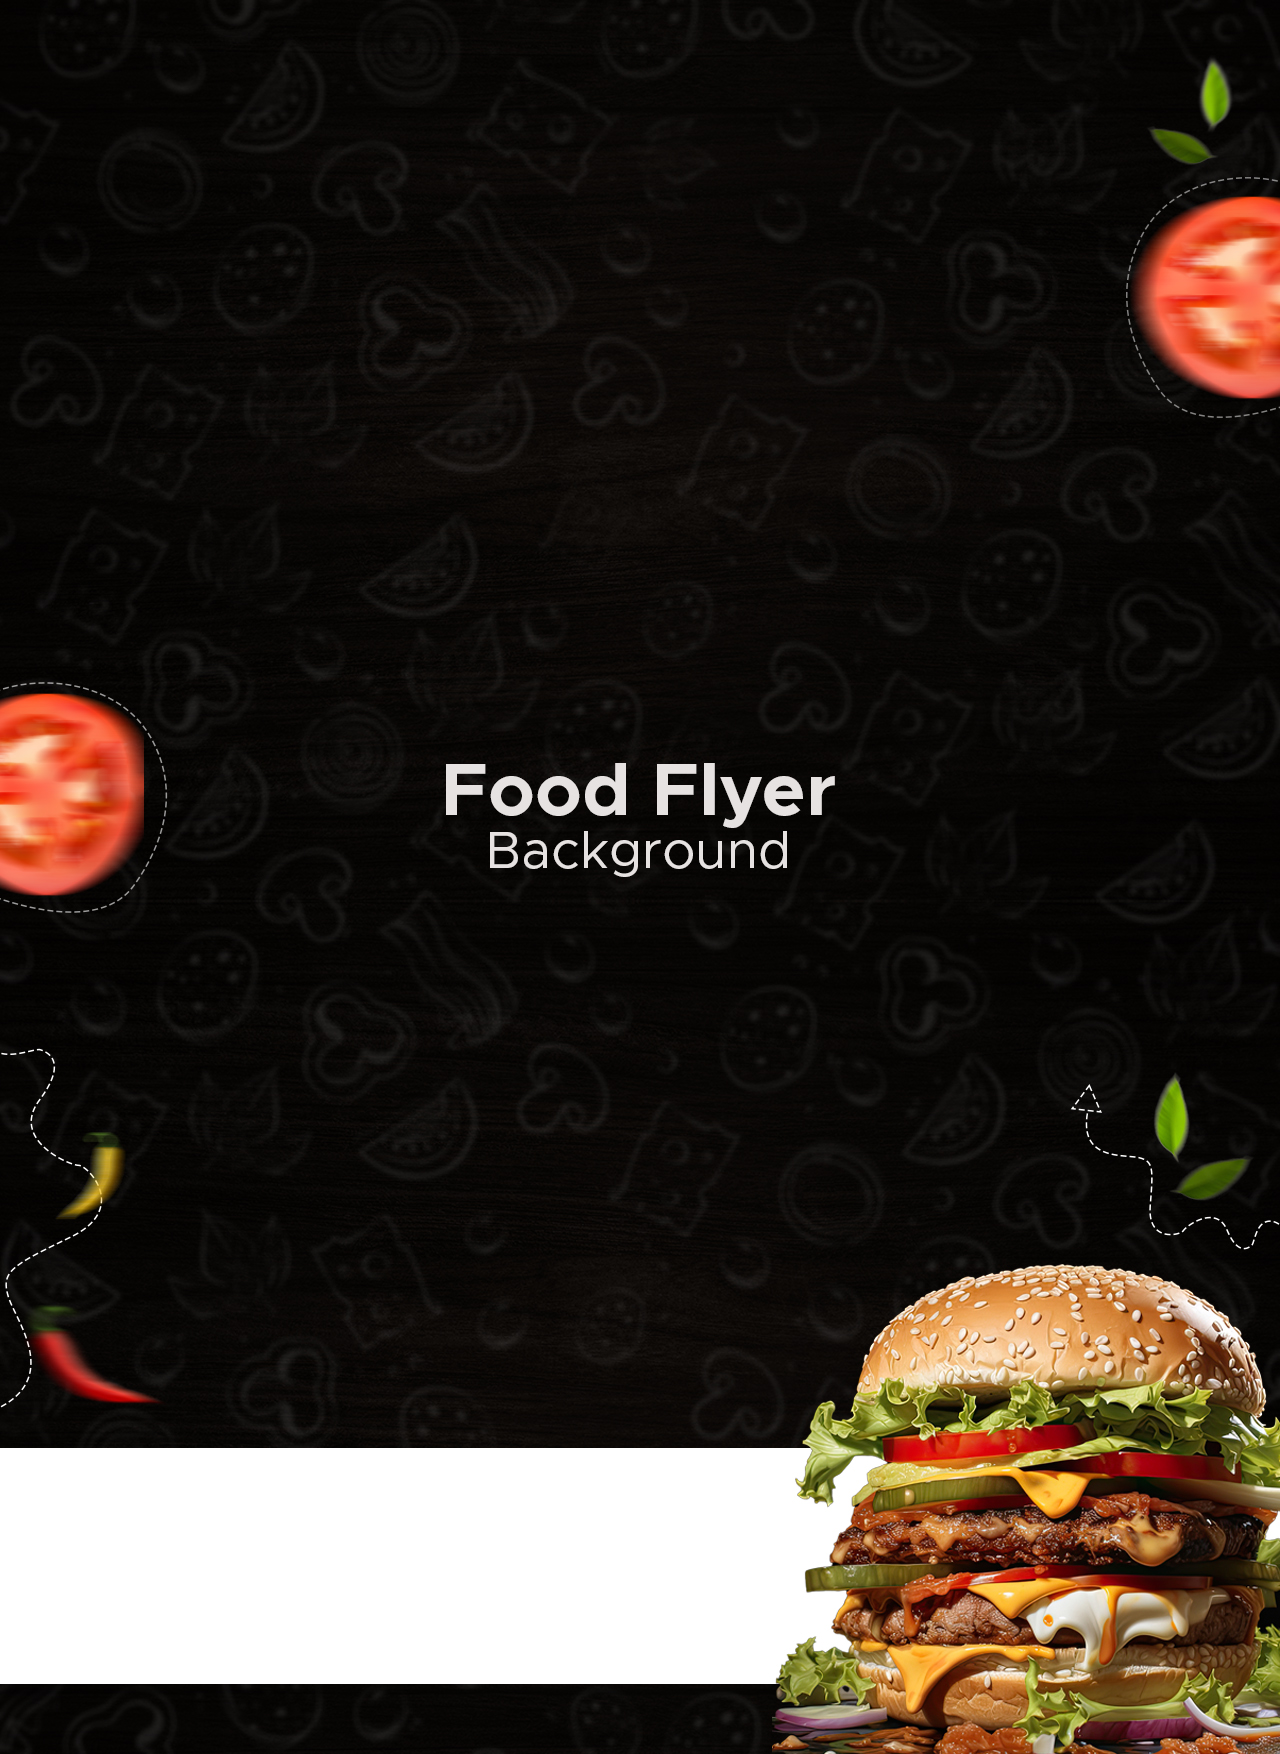 Food Flyer Background Free